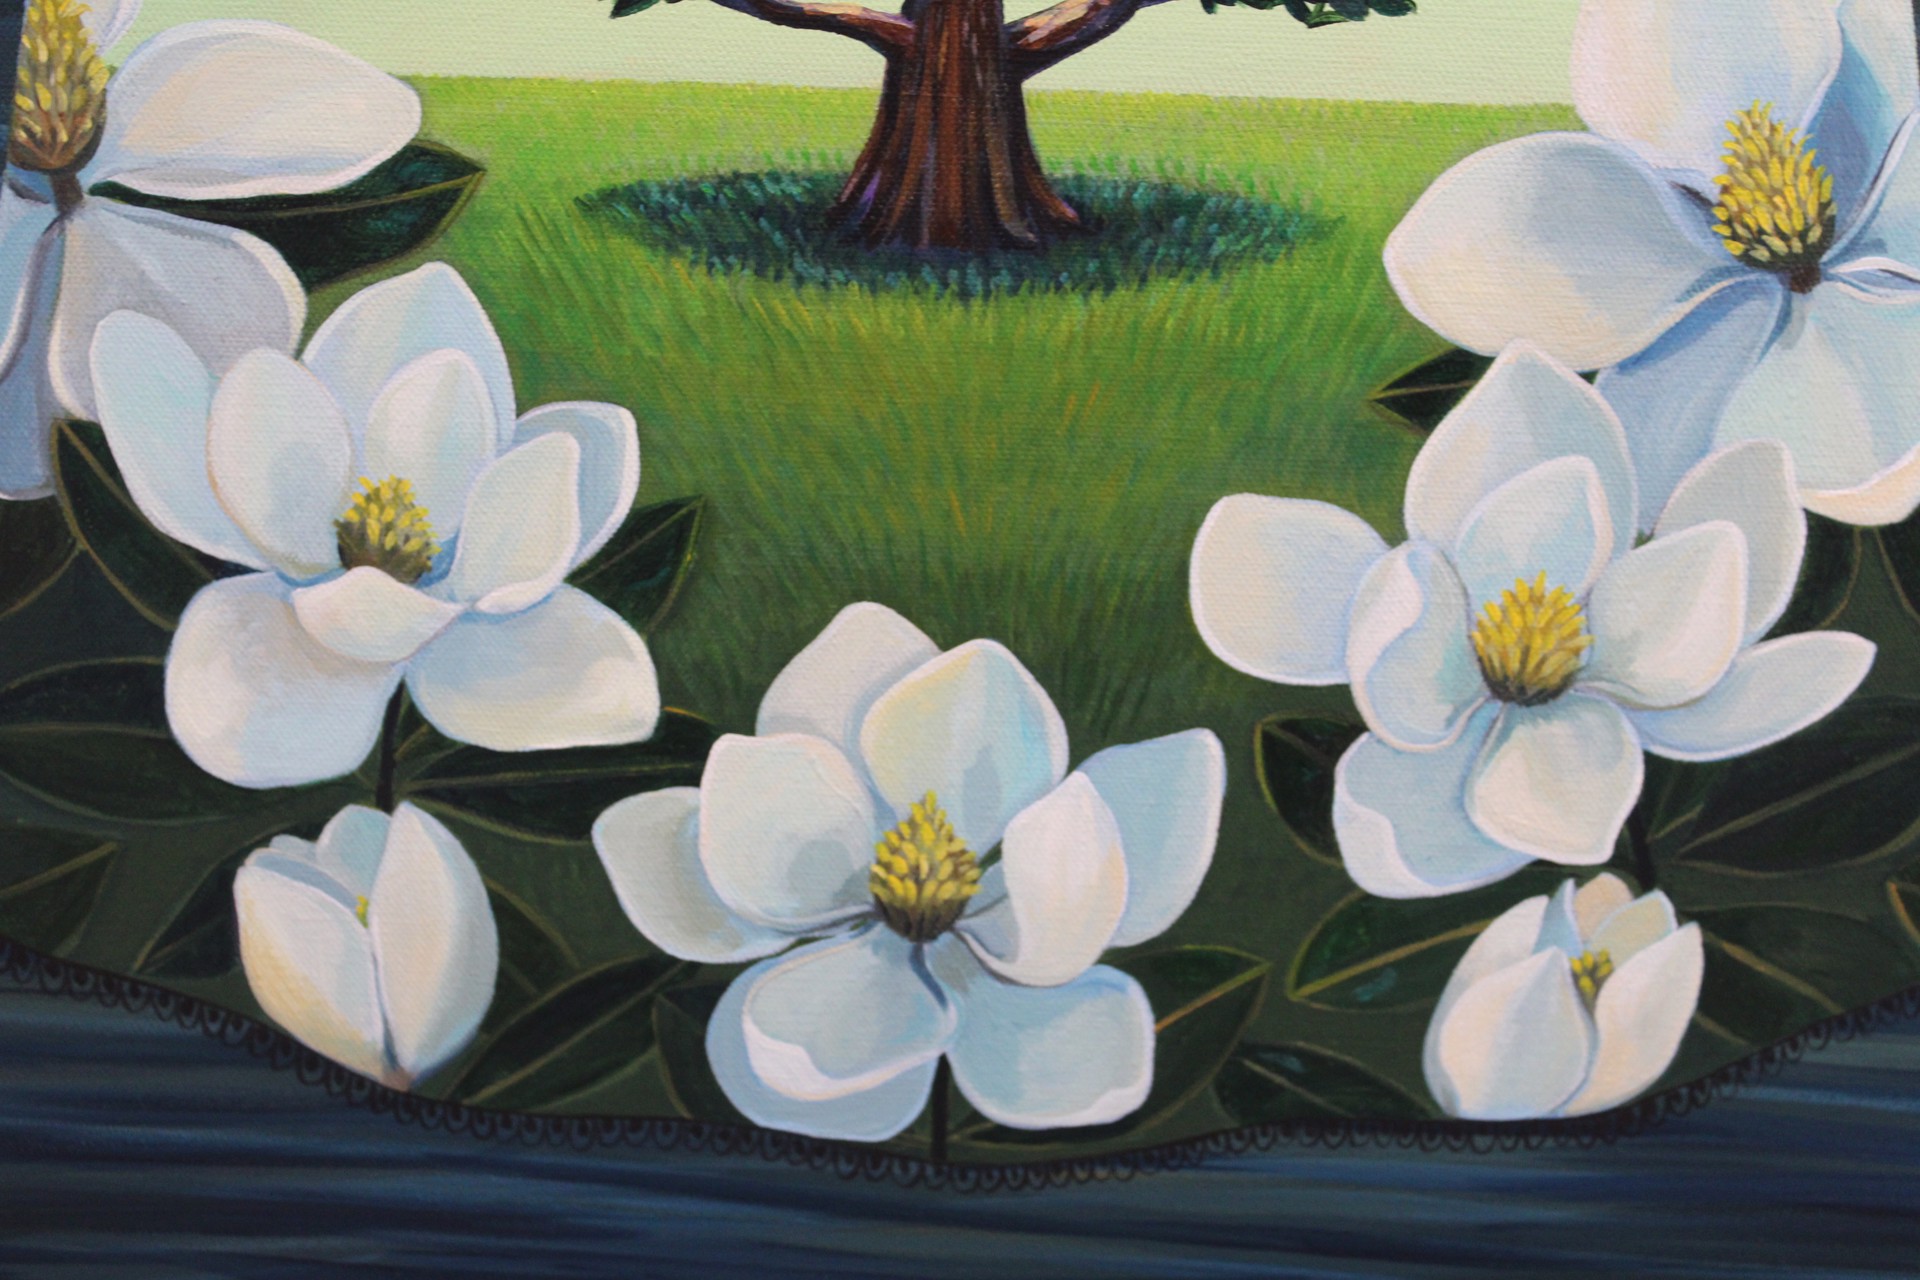 Mourning Dress Magnolia by Lisa Shimko